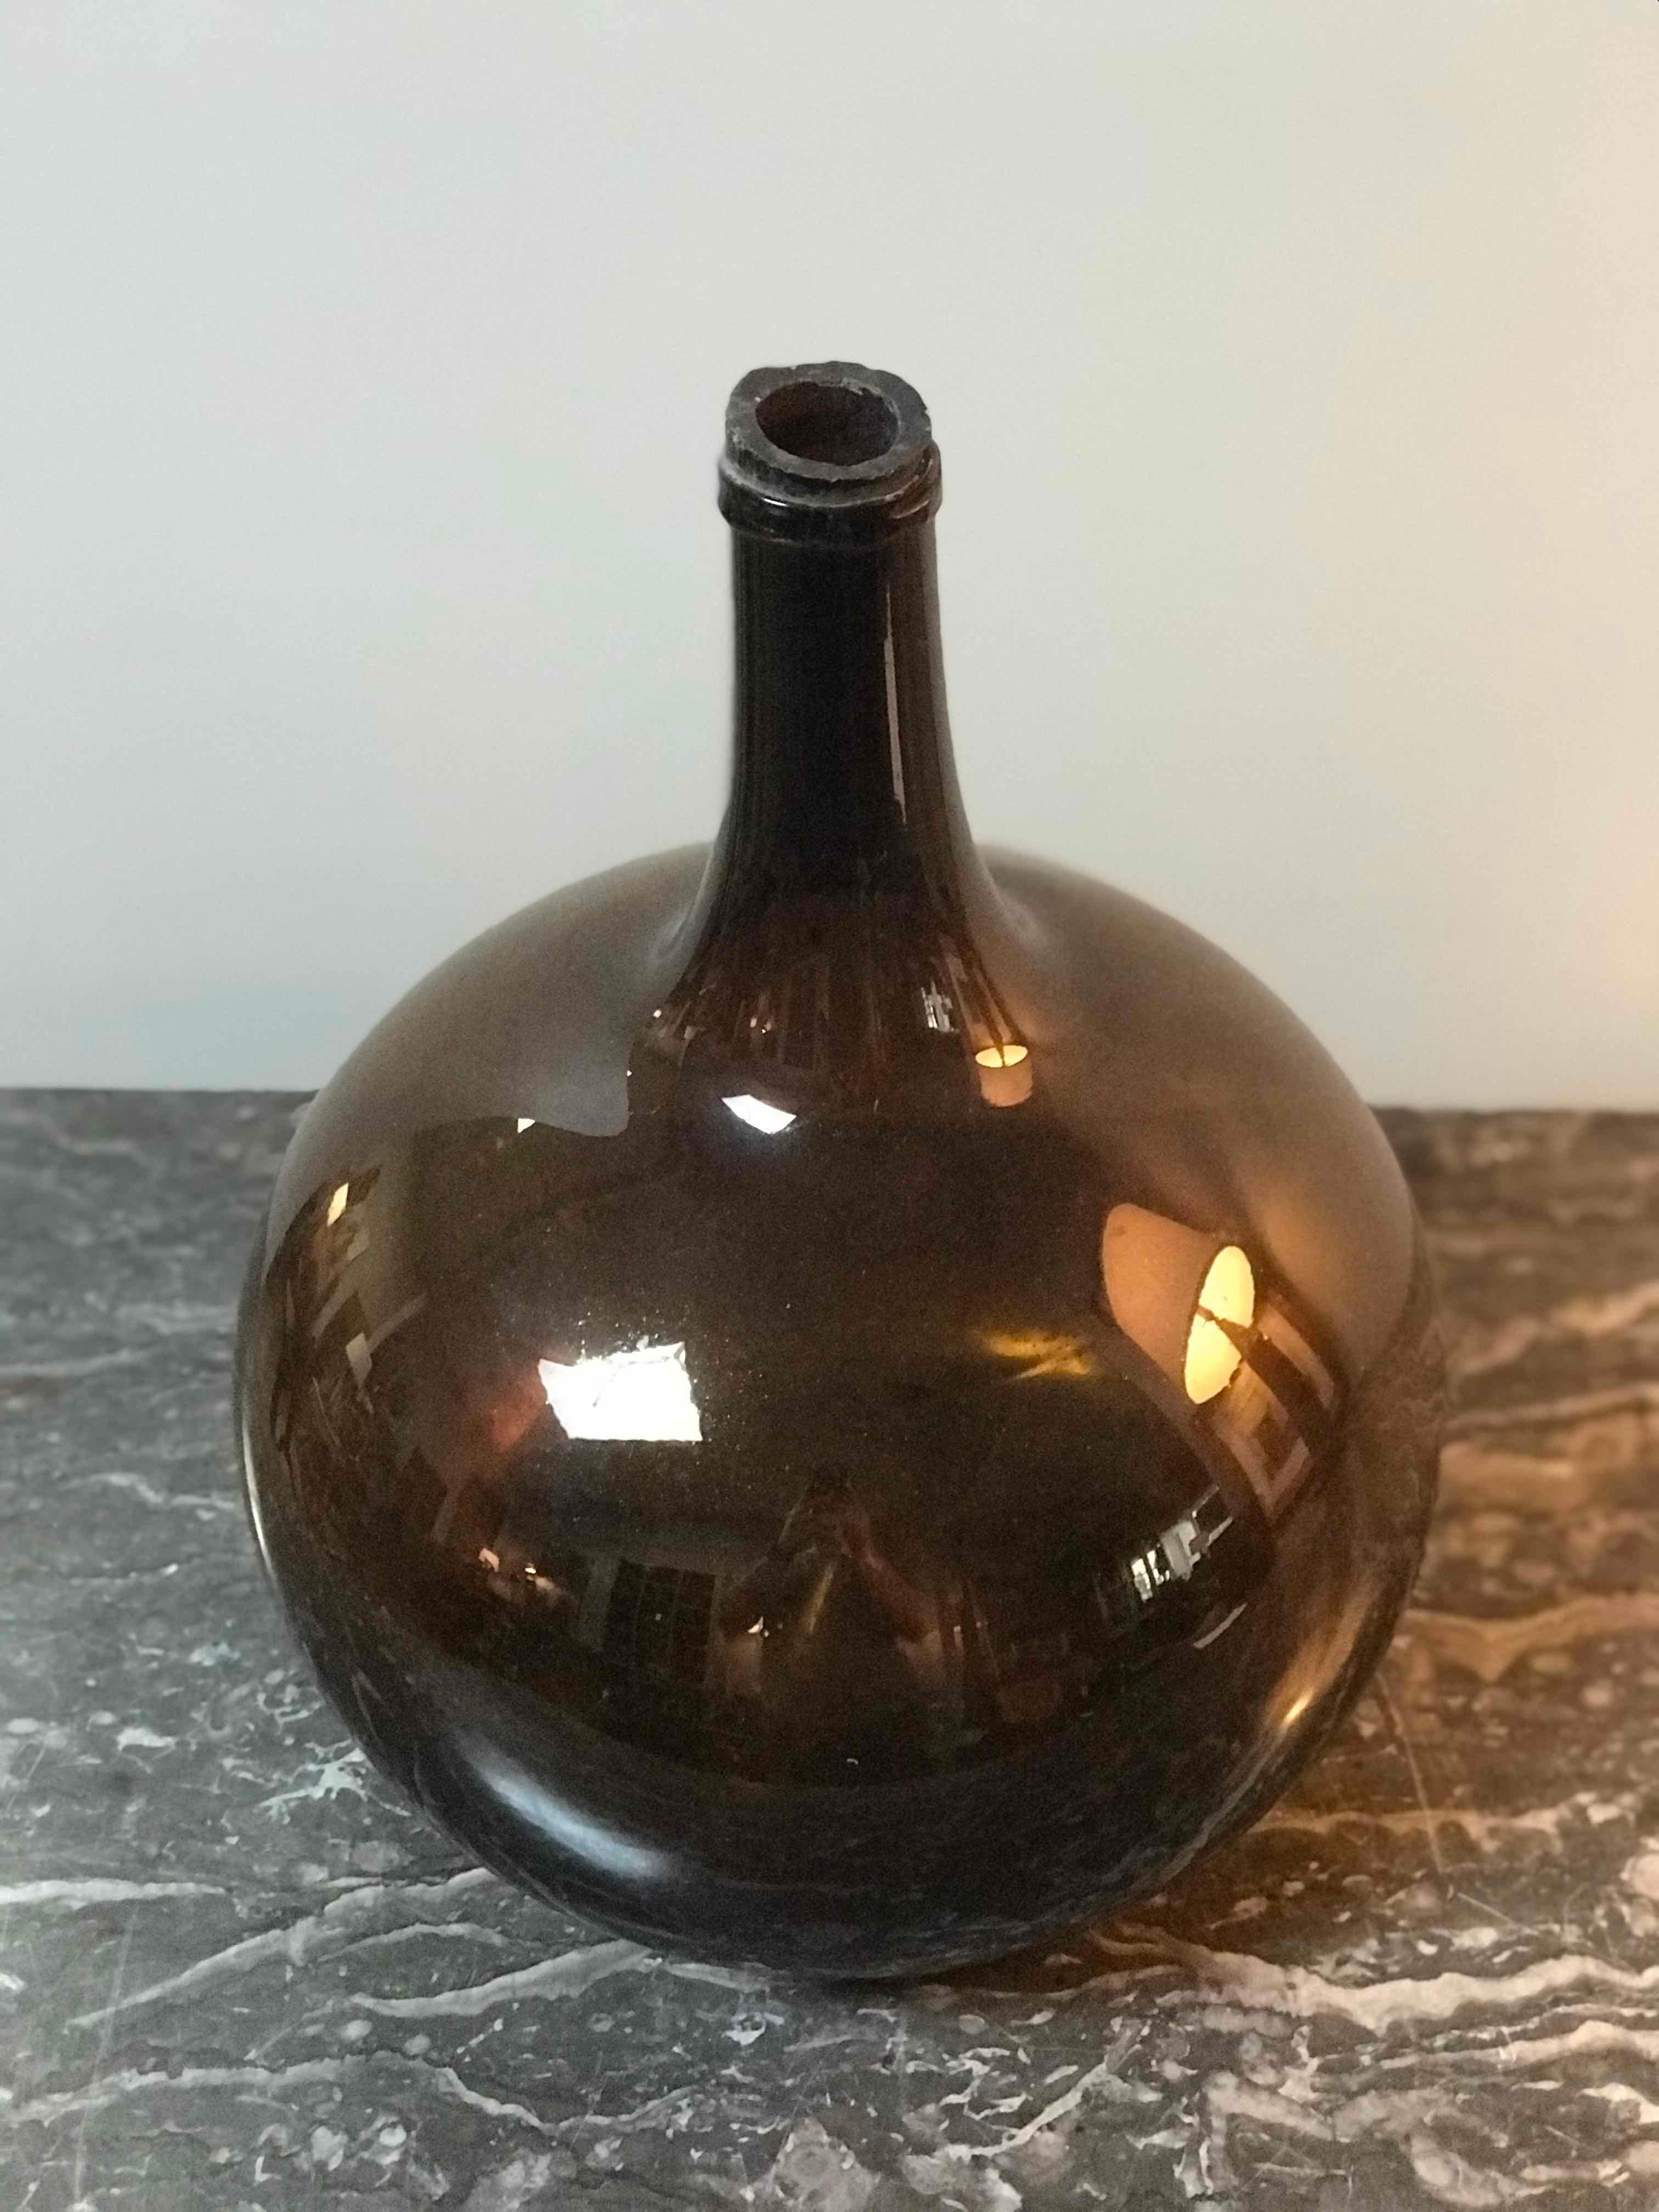 French 19th Century Brown Blown Glass Bottle or Spirit Keg from Burgundy, France